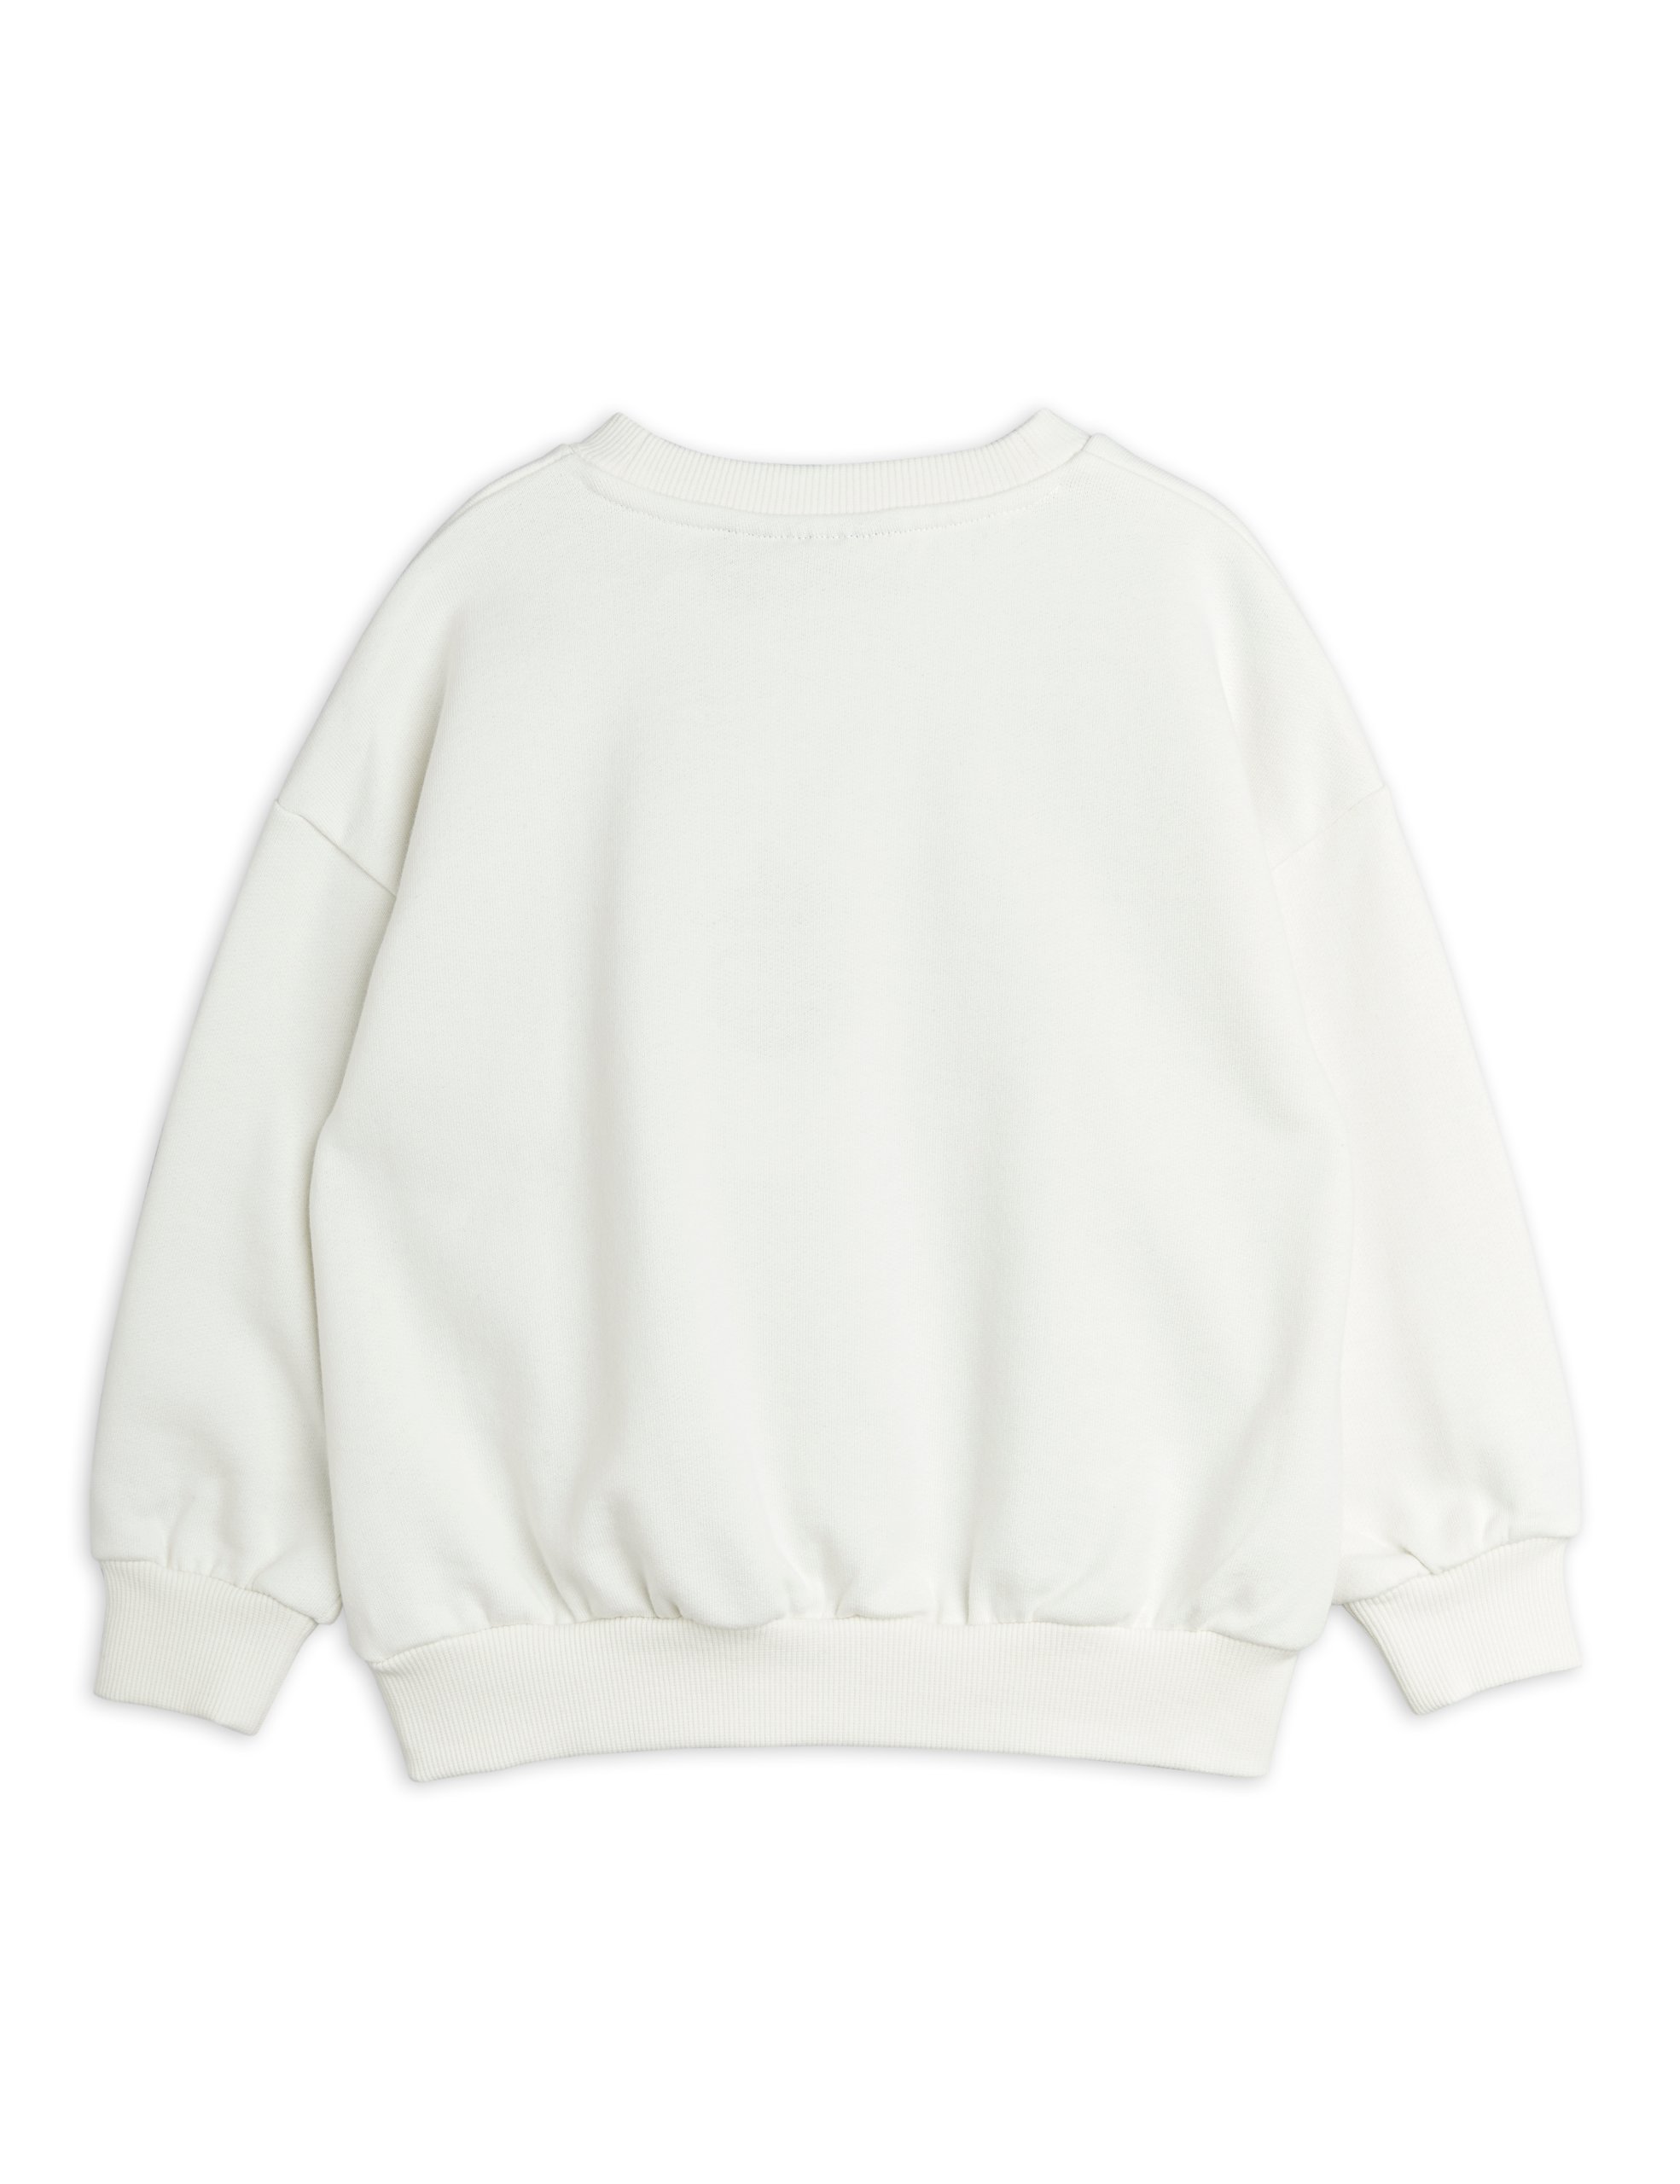 Sweatshirt VULTURE WHITE 